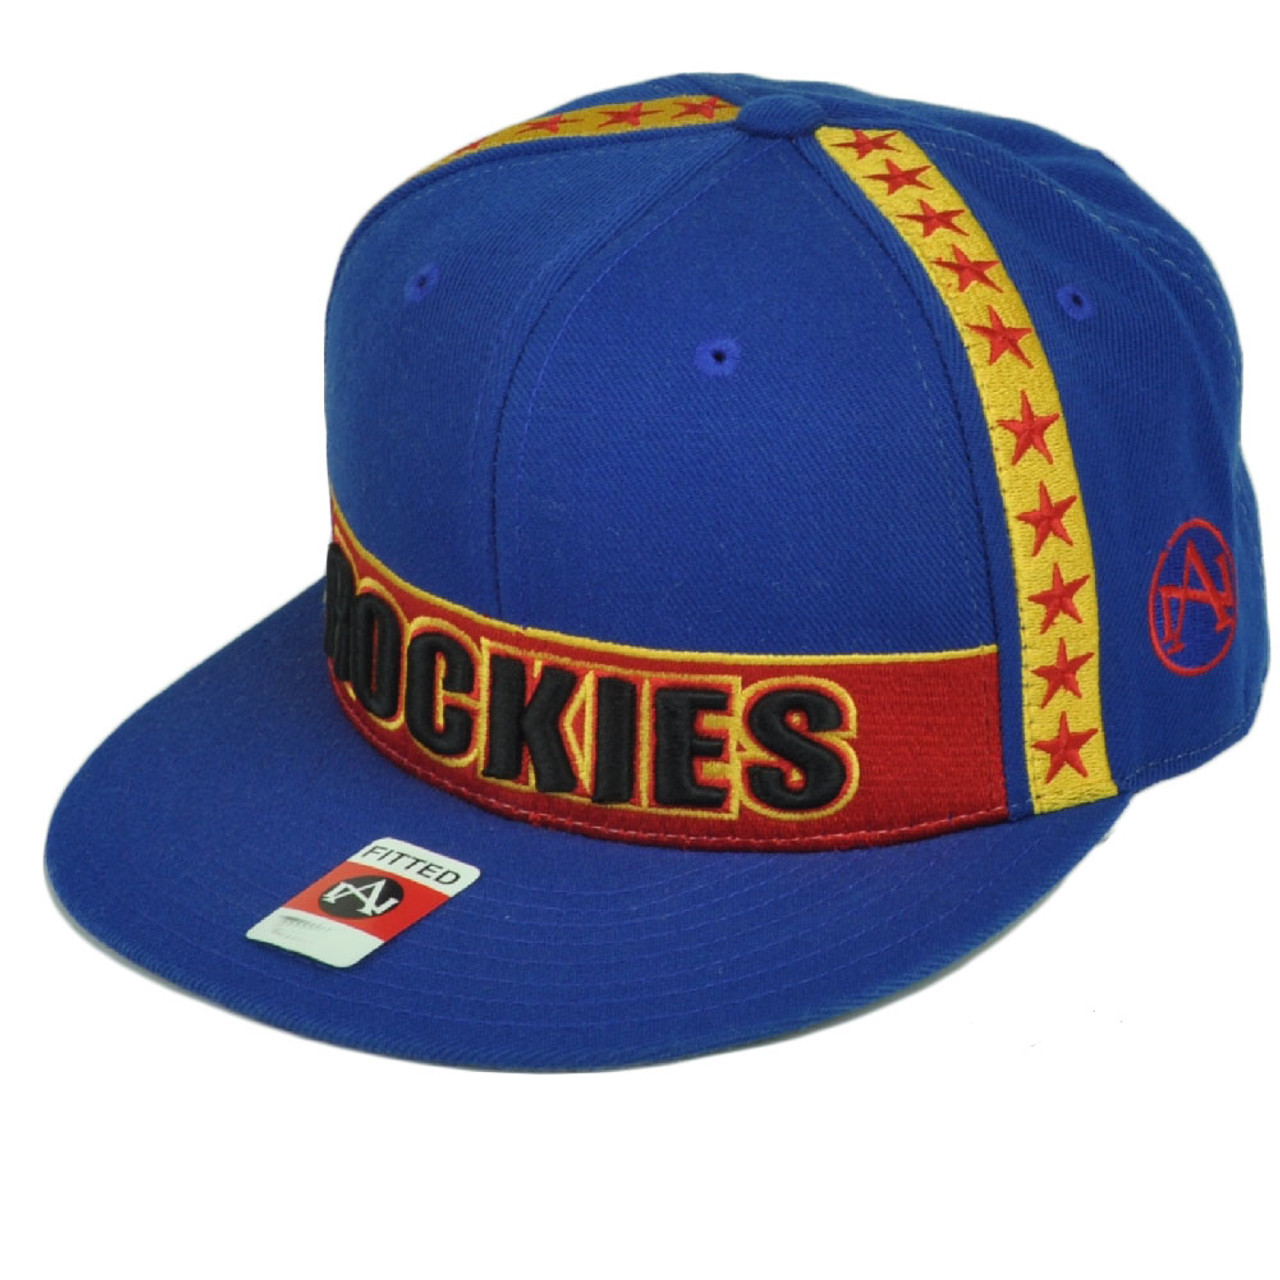 NHL American Needle Colorado Rockies Fitted 7 1/4 Hat Cap Vintage Flat Bill  Blue - Cap Store Online.com